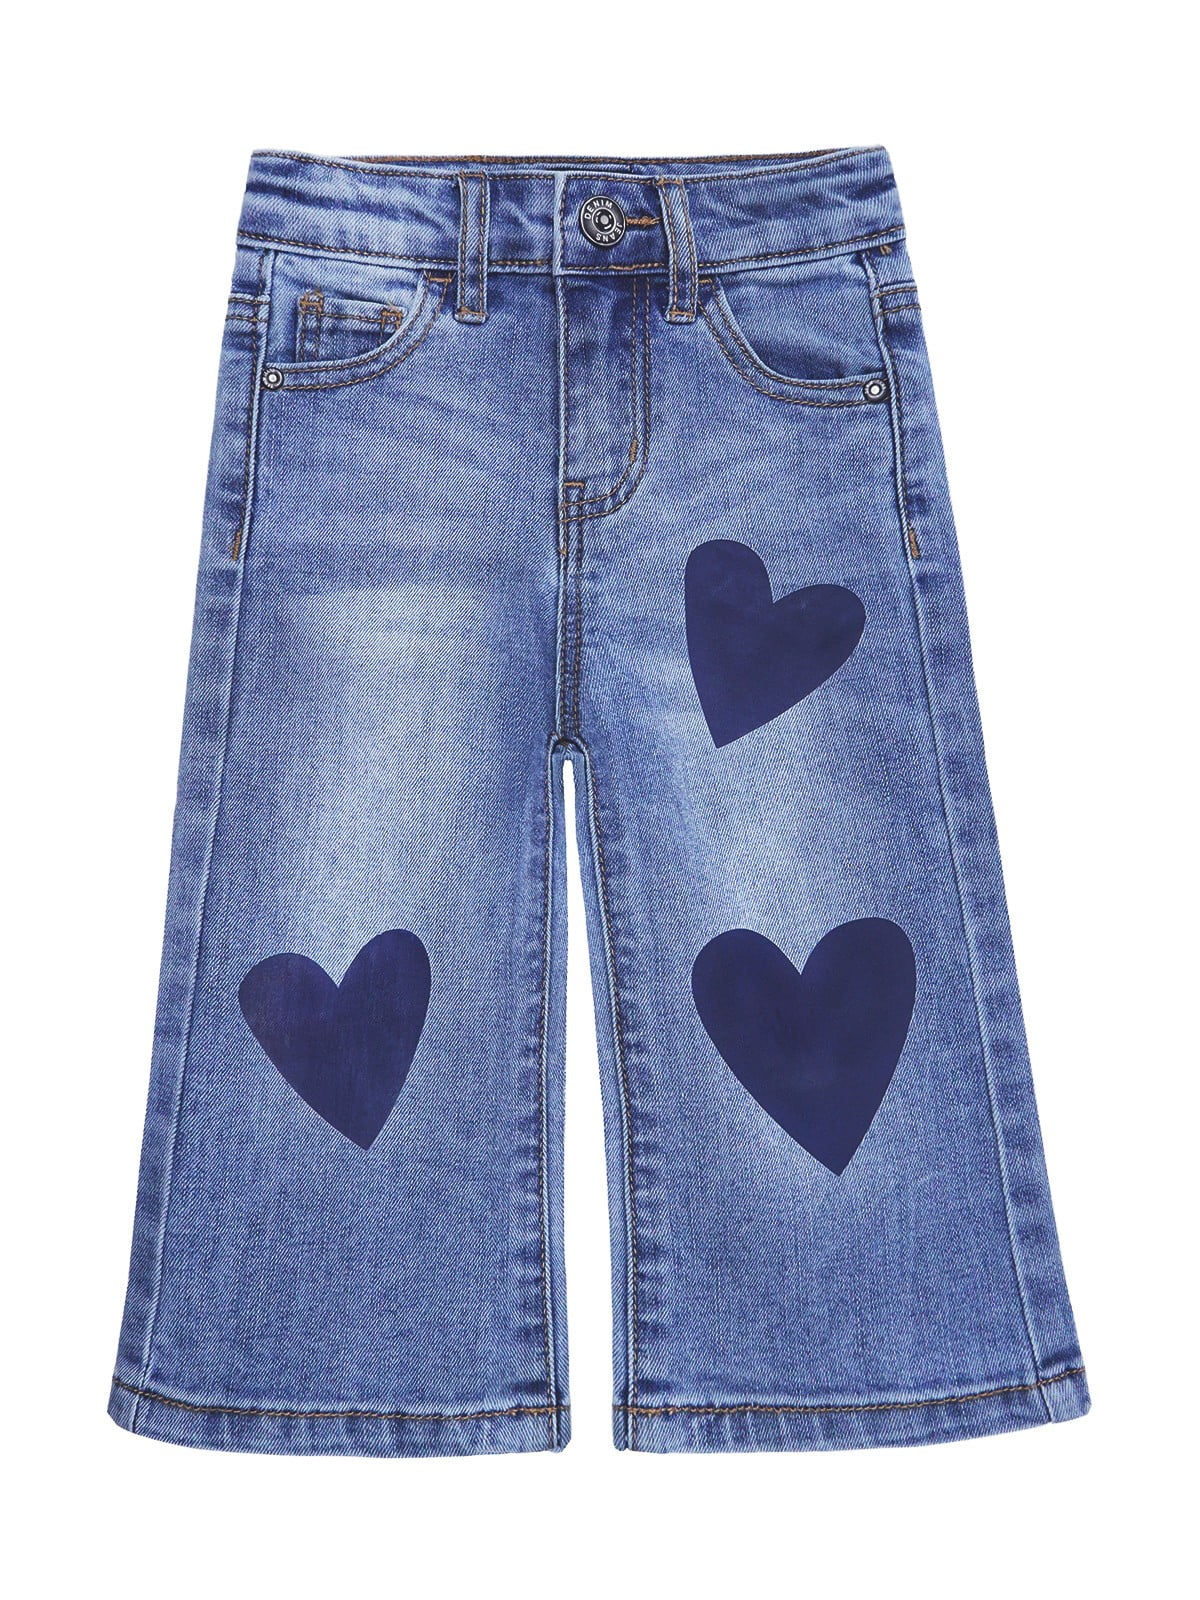 Latest Stylish Jeans Pants For Kids 2020-2021/ Boys Jeans Design Ideas/Kids  Denim Jeans | Kids jeans boys, Kids denim jeans, Stylish jeans